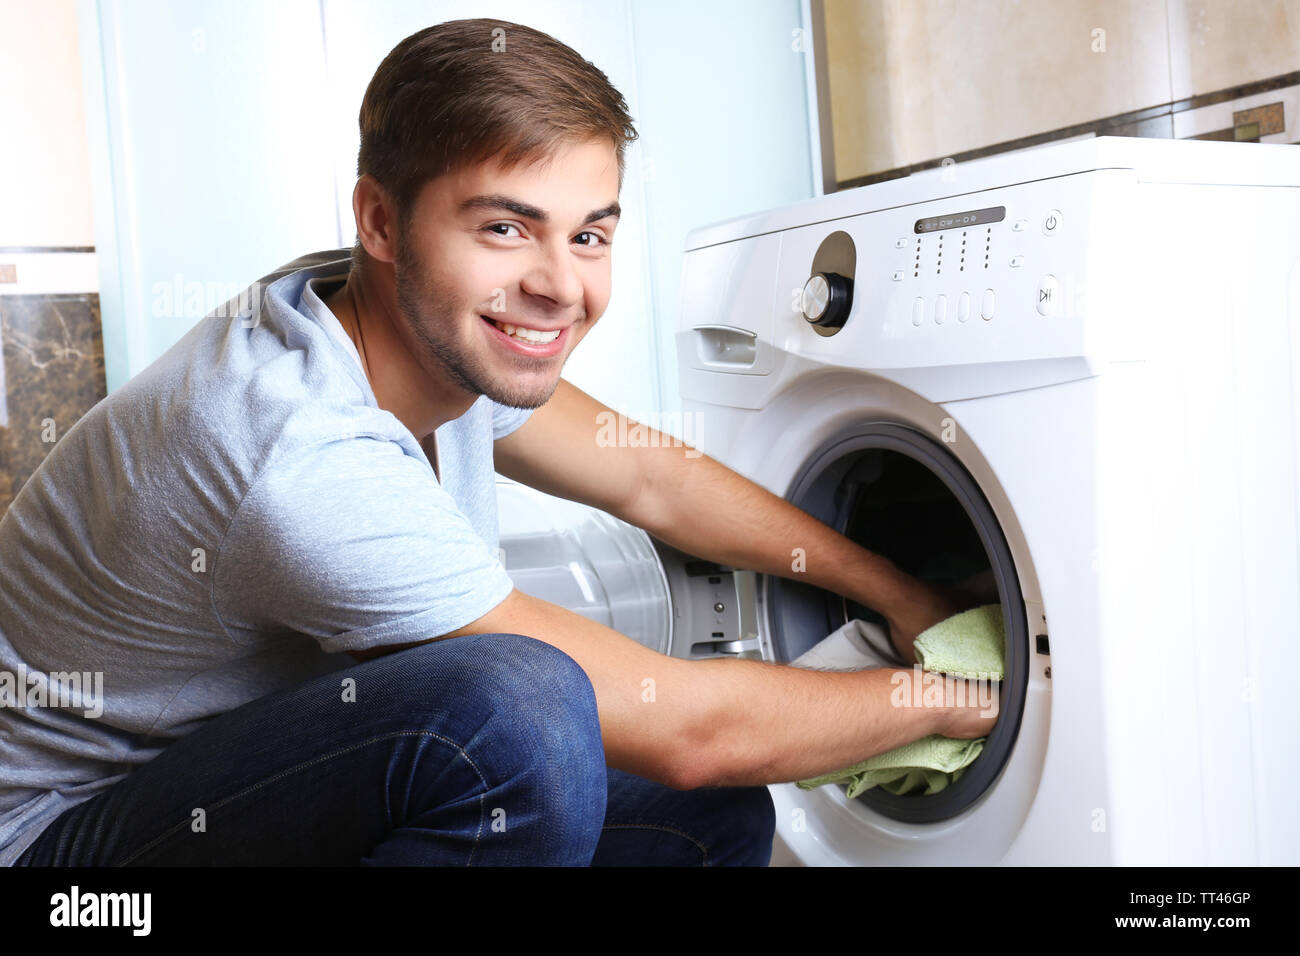 Как менялась стиральная машина